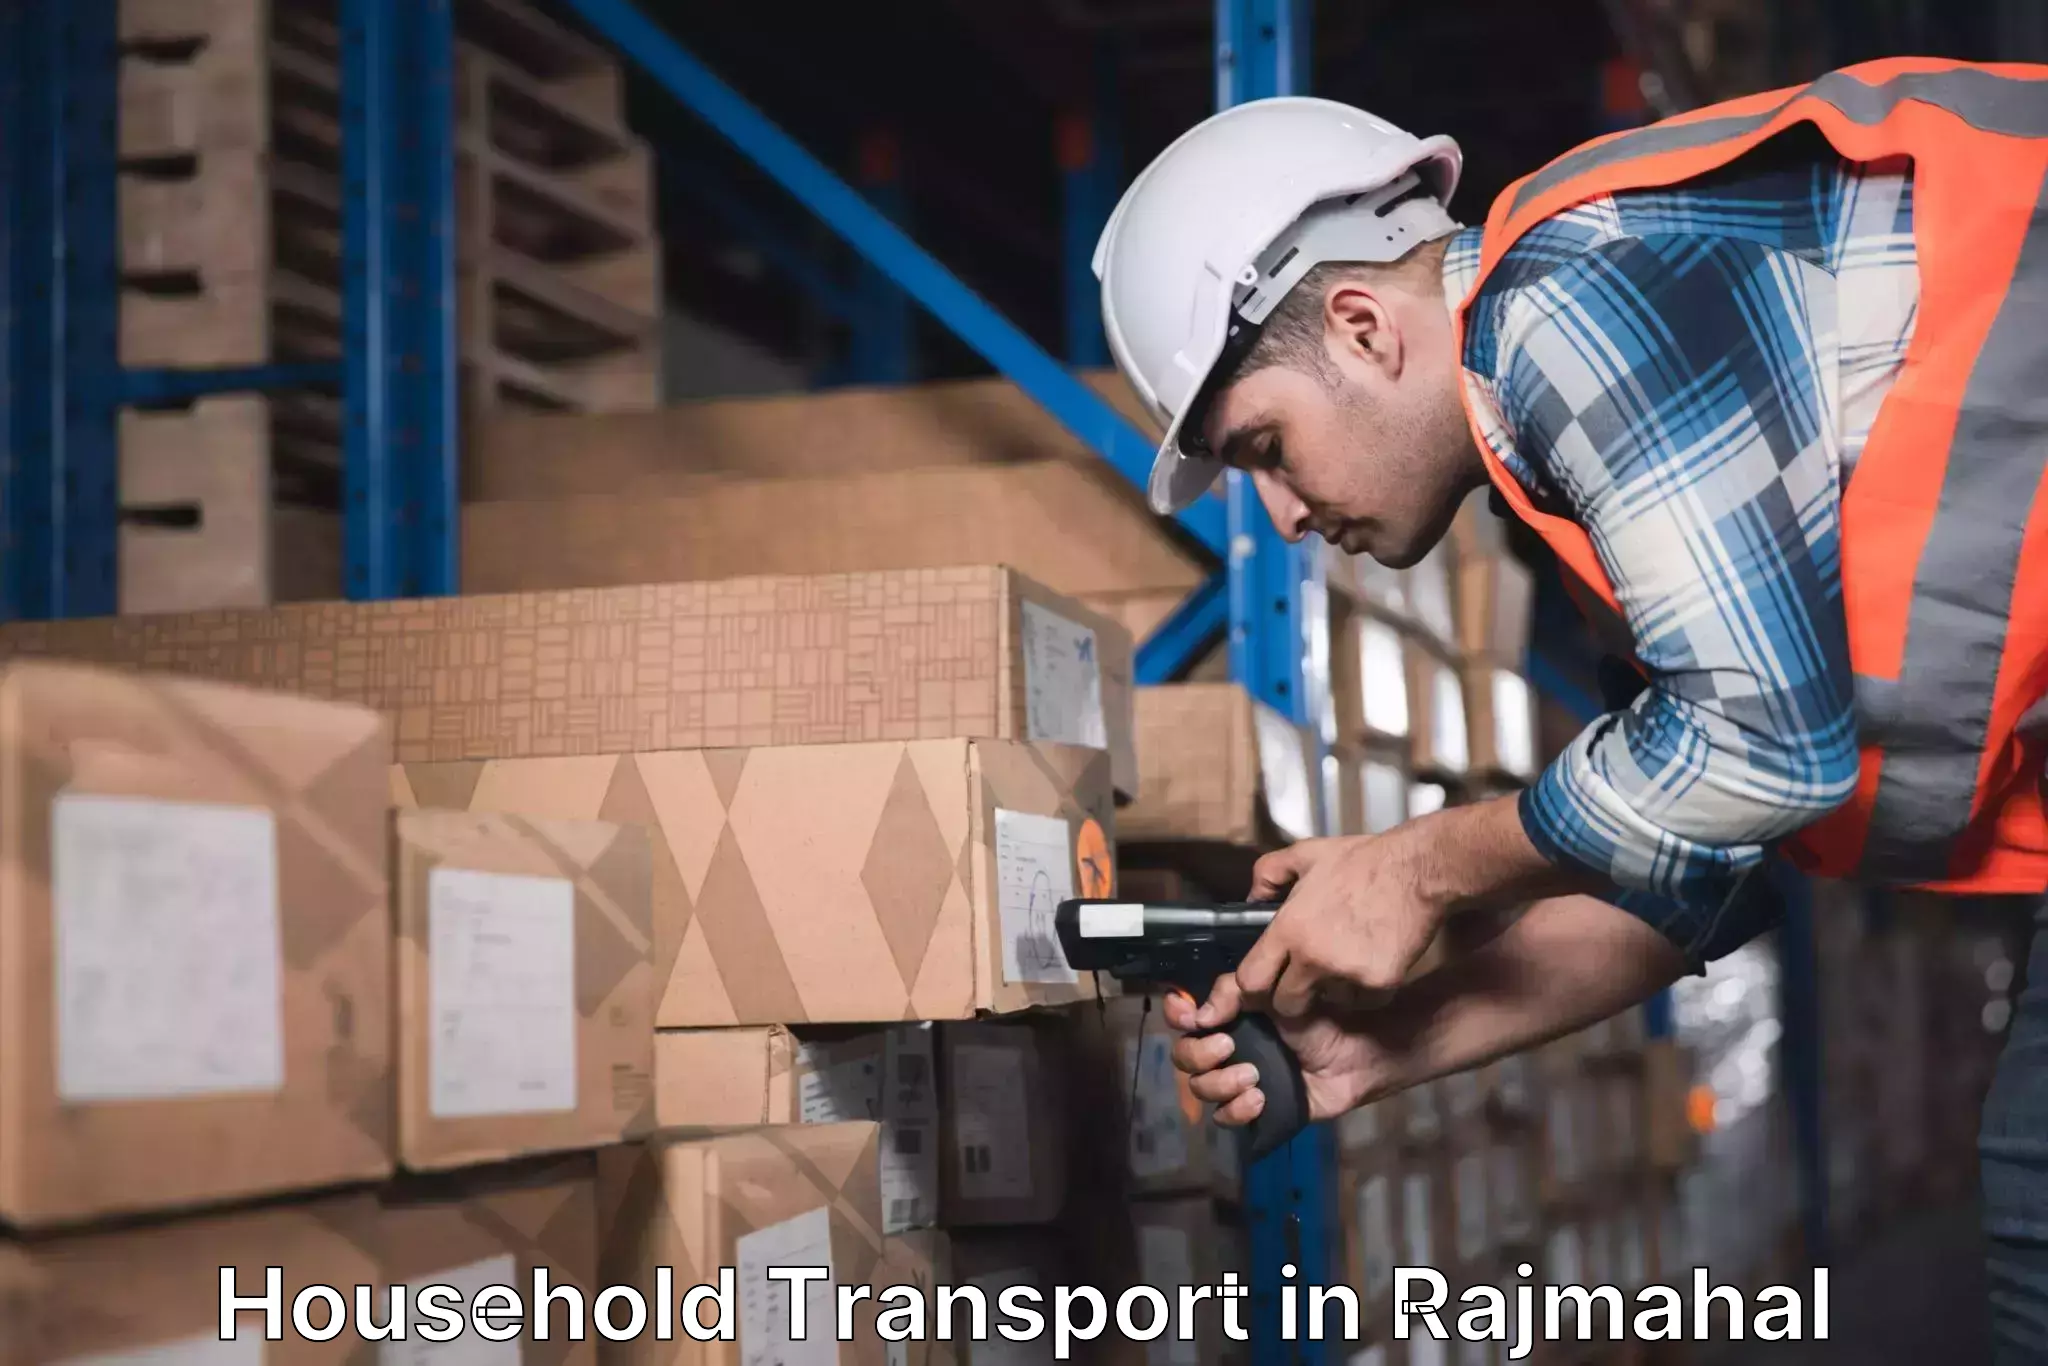 Household goods transport service in Rajmahal